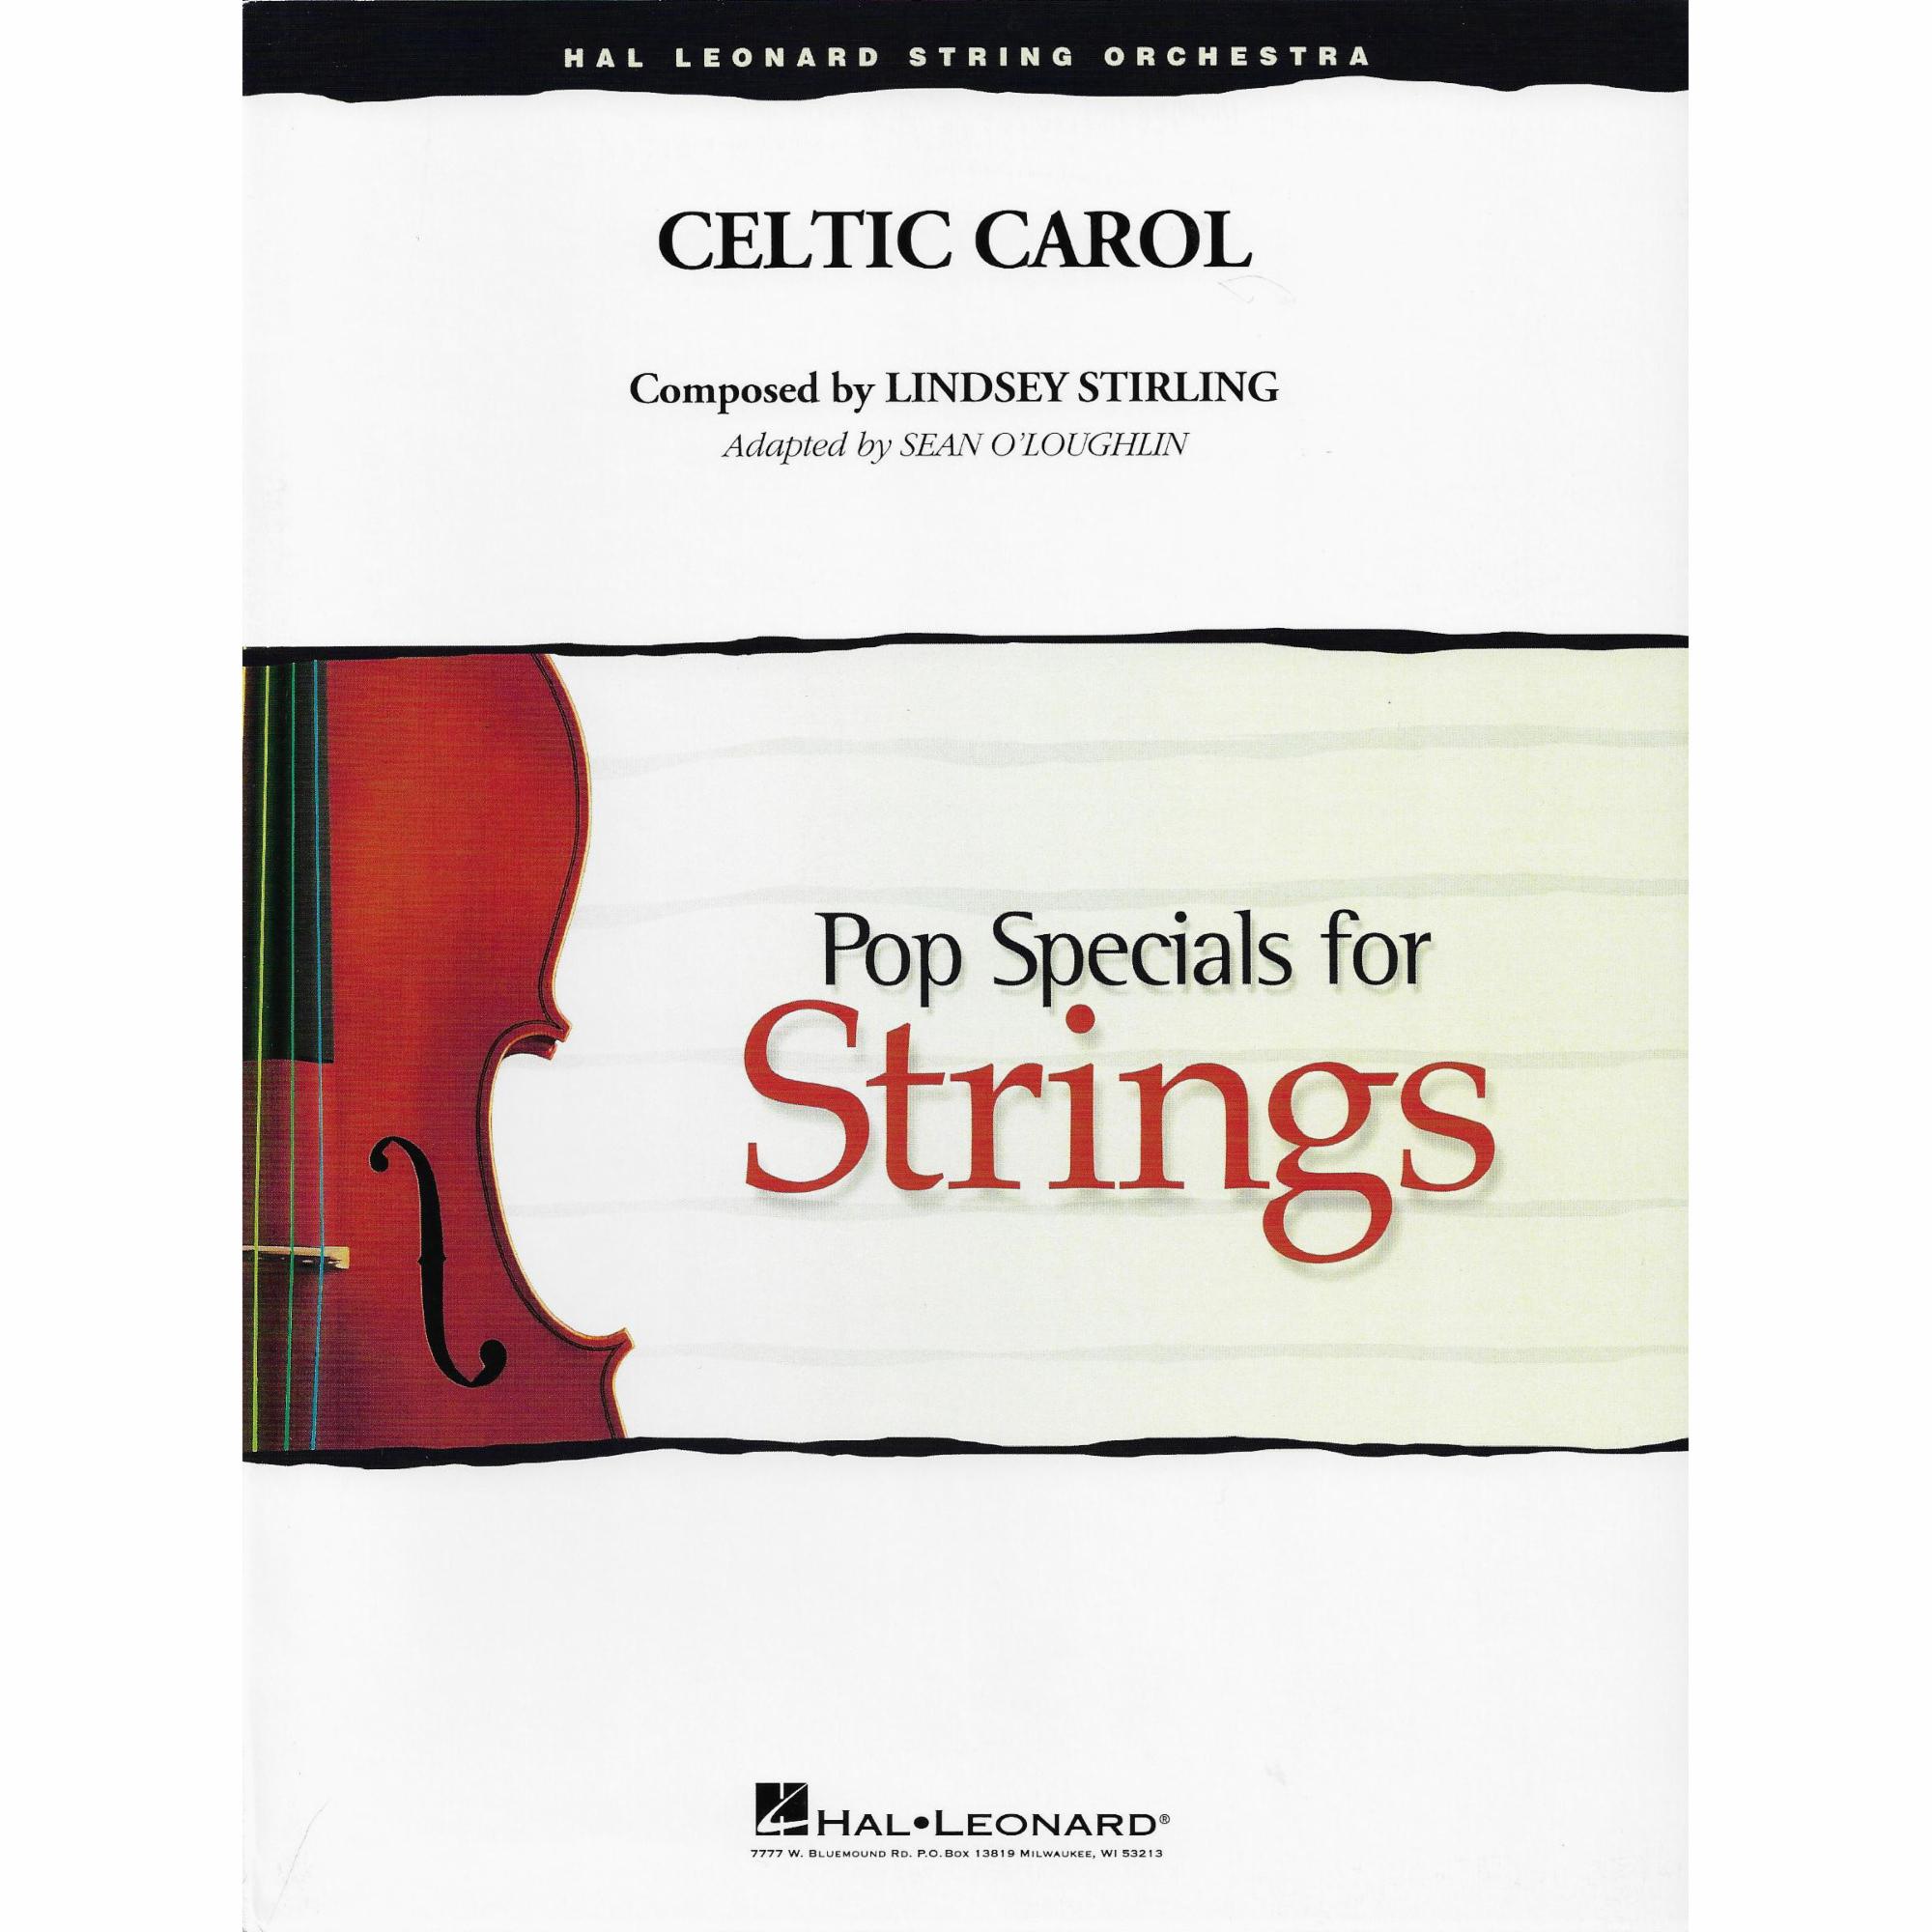 Celtic Carol for String Orchestra